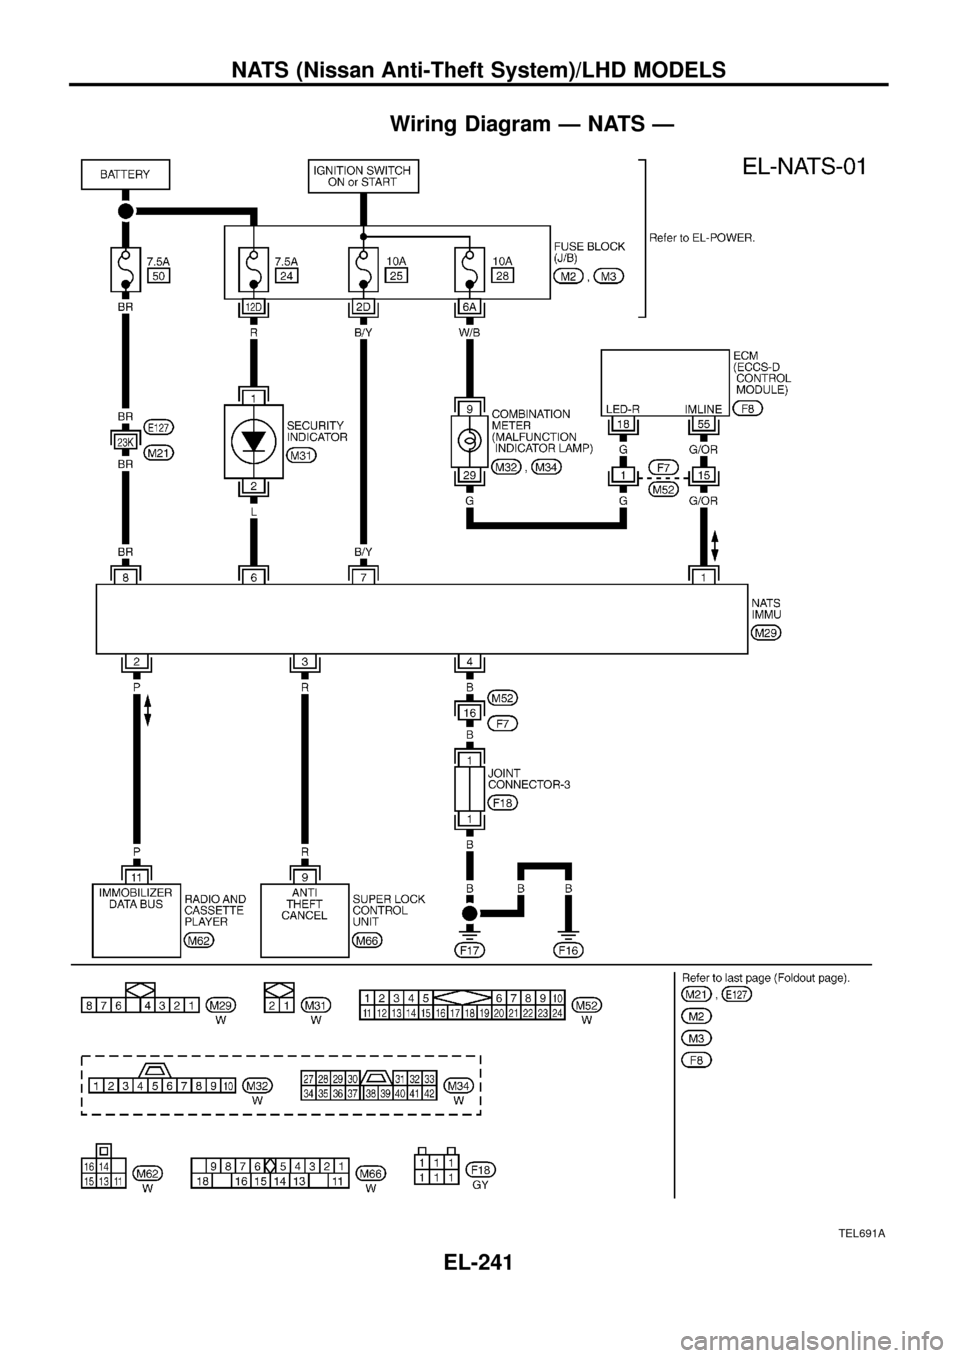 NISSAN PATROL 1998 Y61 / 5.G Electrical System Workshop Manual Wiring Diagram Ð NATS Ð
TEL691A
NATS (Nissan Anti-Theft System)/LHD MODELS
EL-241 